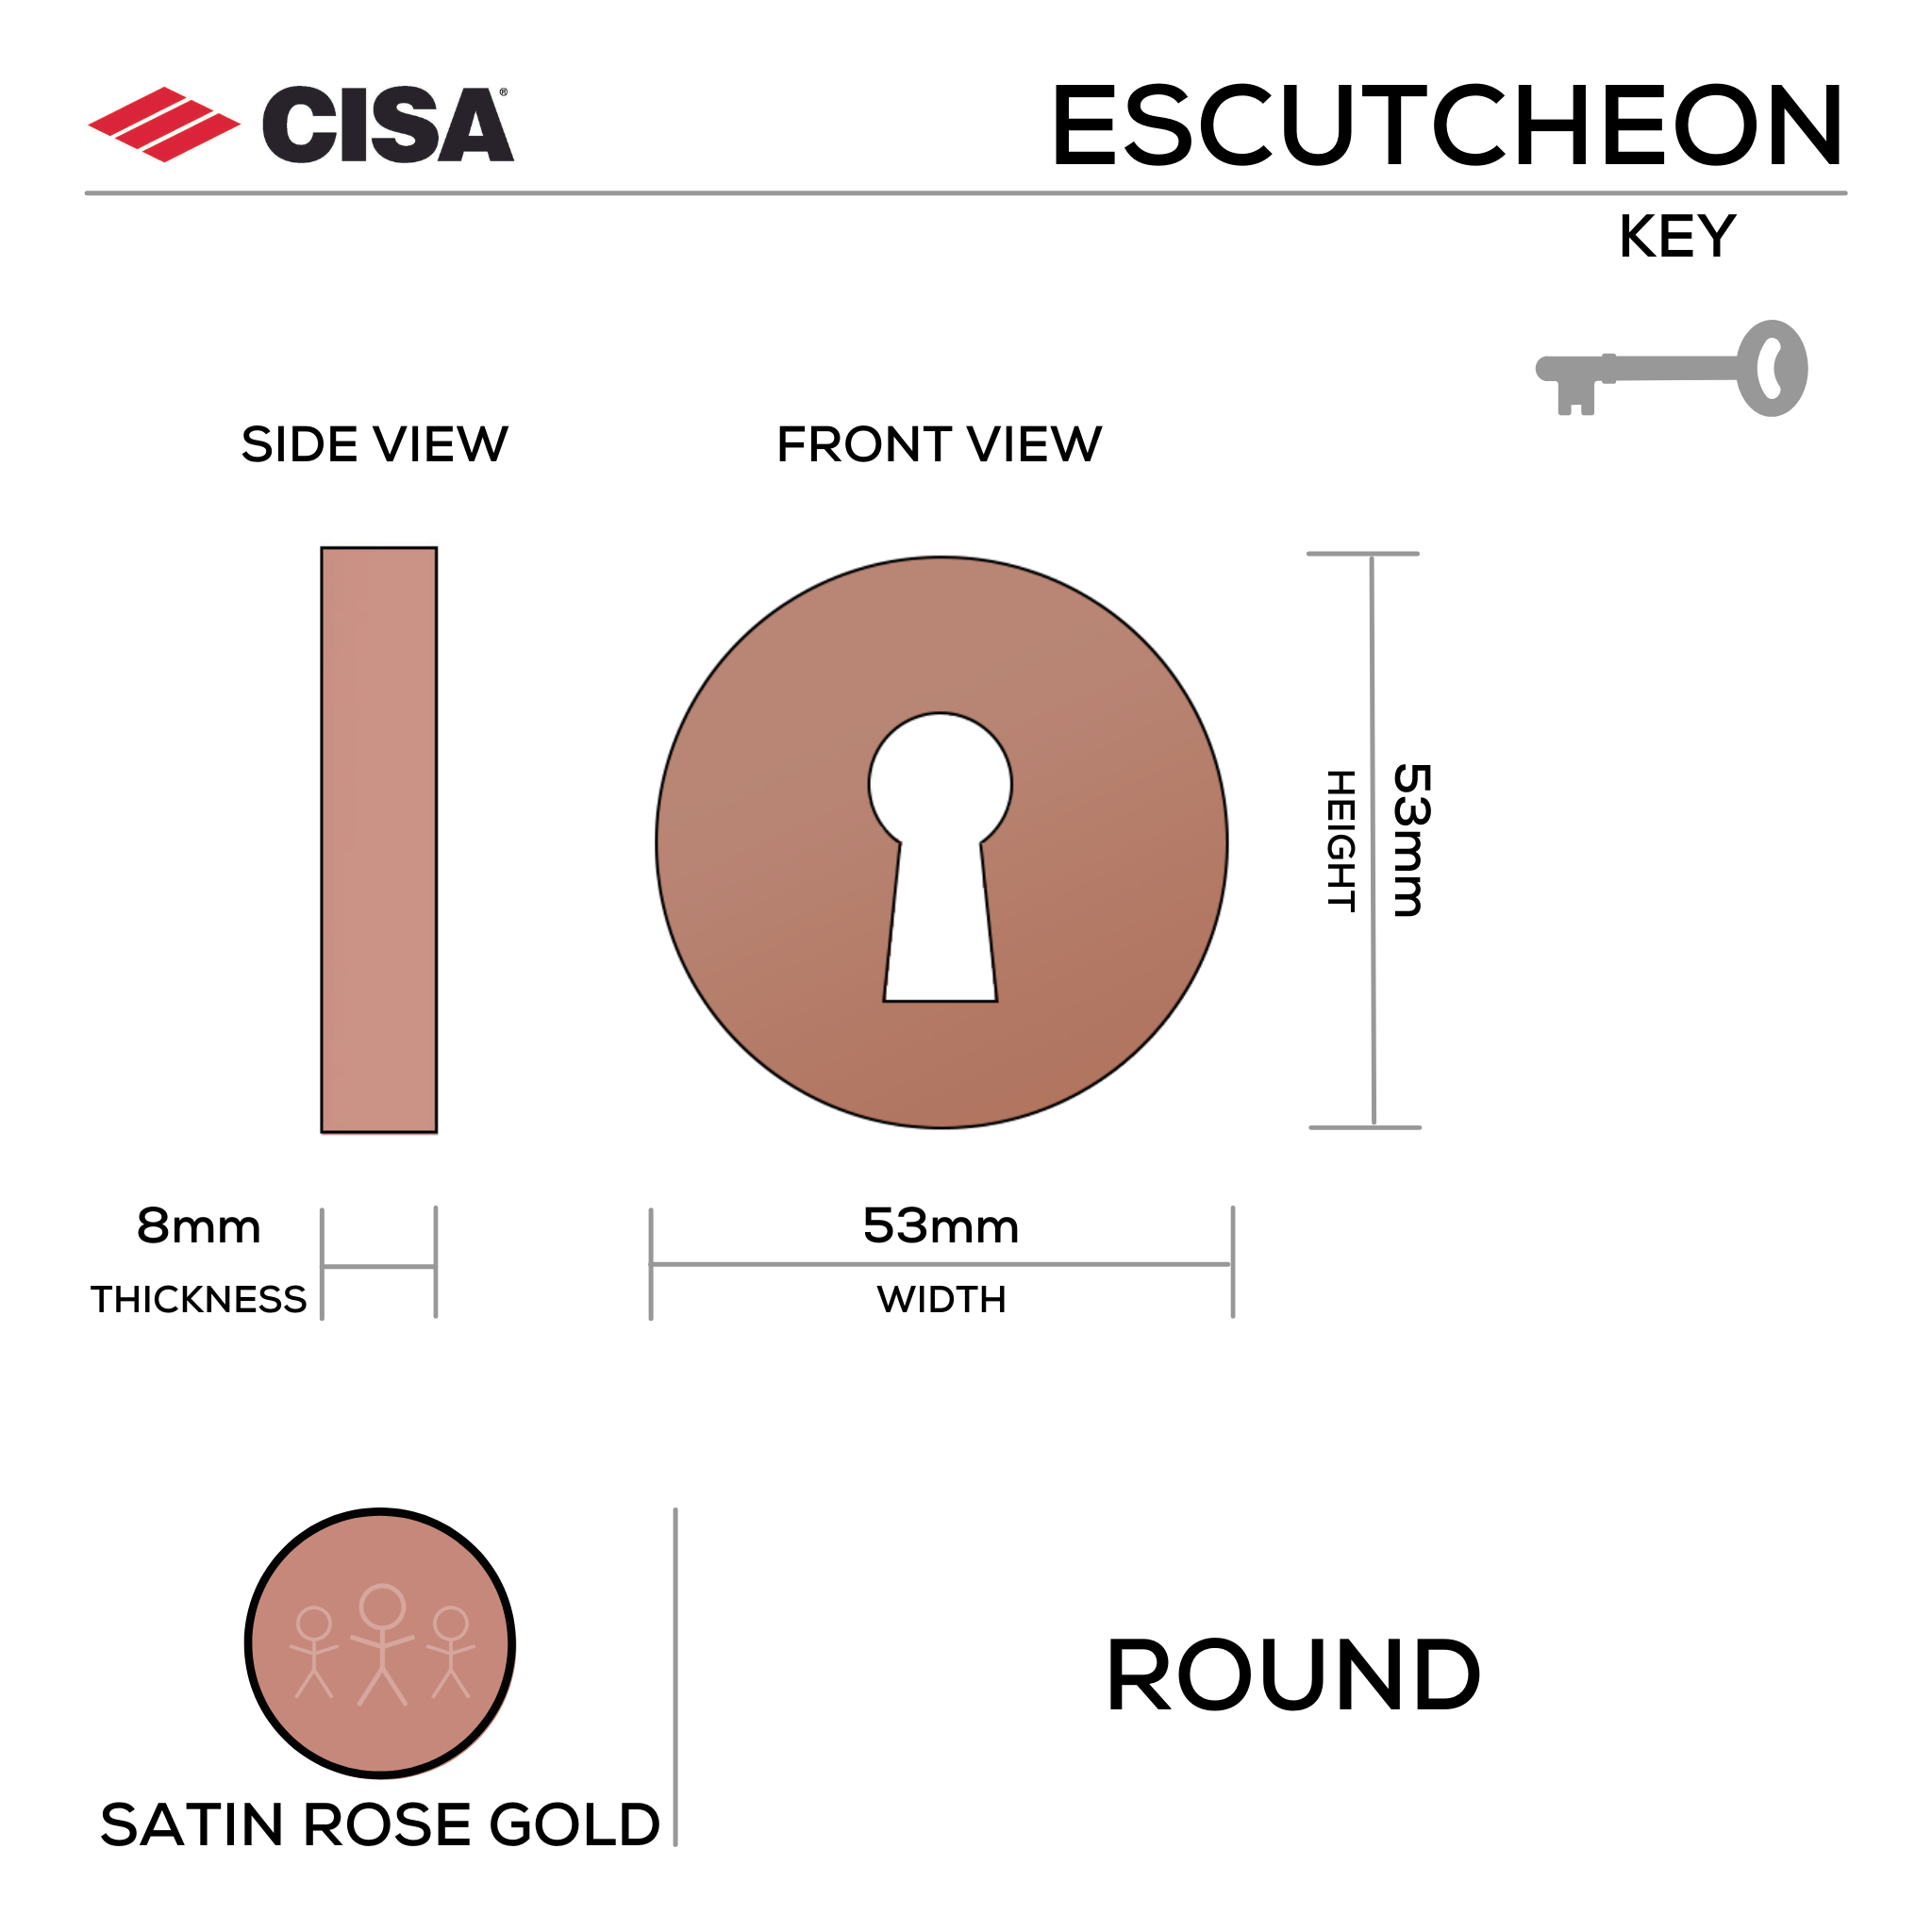 FE.R.K.SRG, Keyhole Escutcheon, Round Rose, 53mm (h) x 53mm (w) x 8mm (t), Satin Rose Gold, CISA